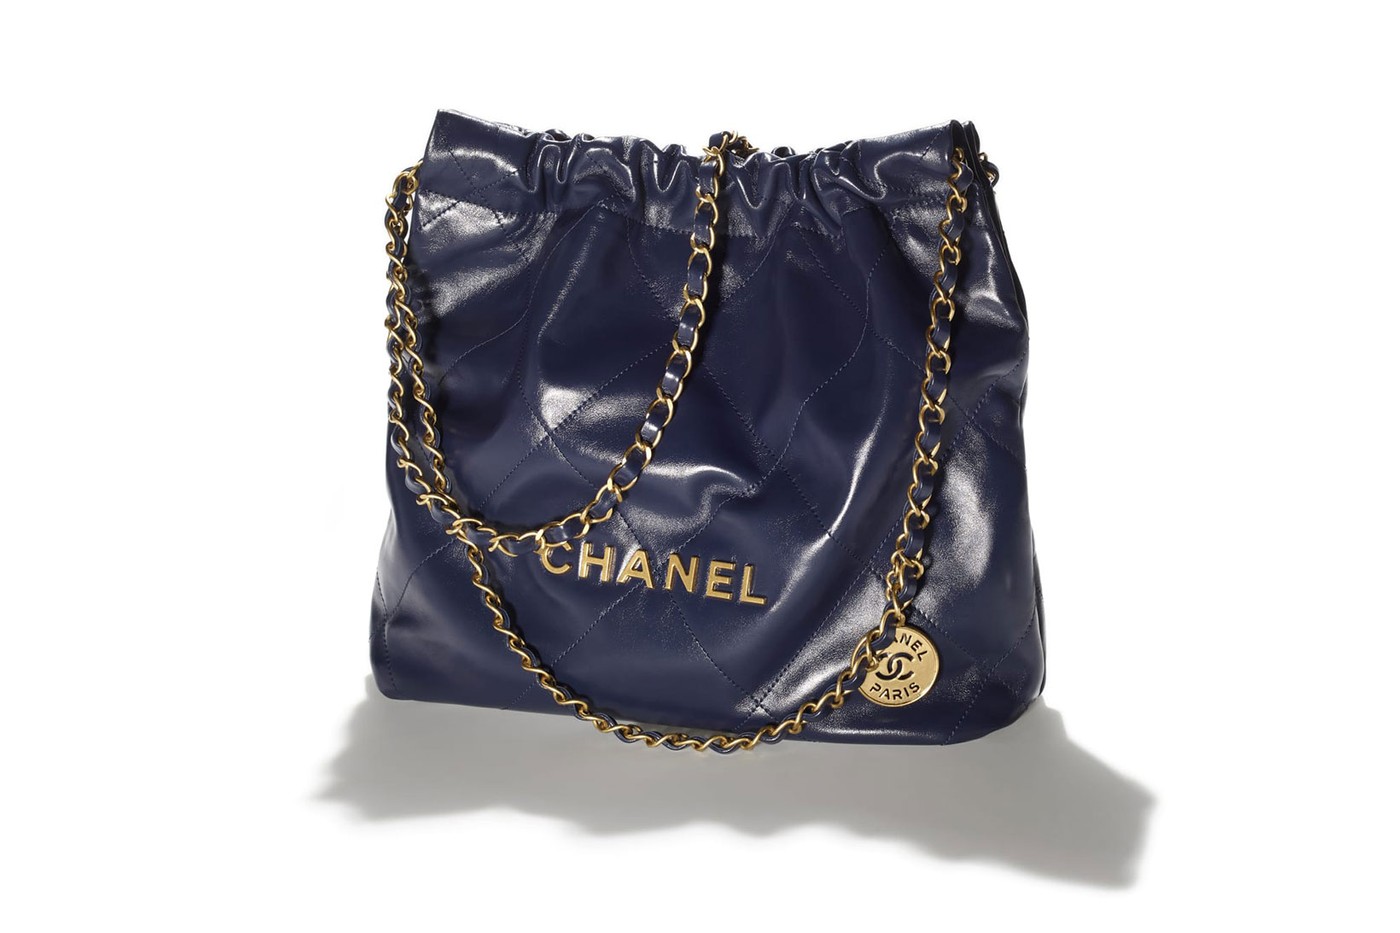 Виржини Виар представила новую сумку Chanel (фото 2)